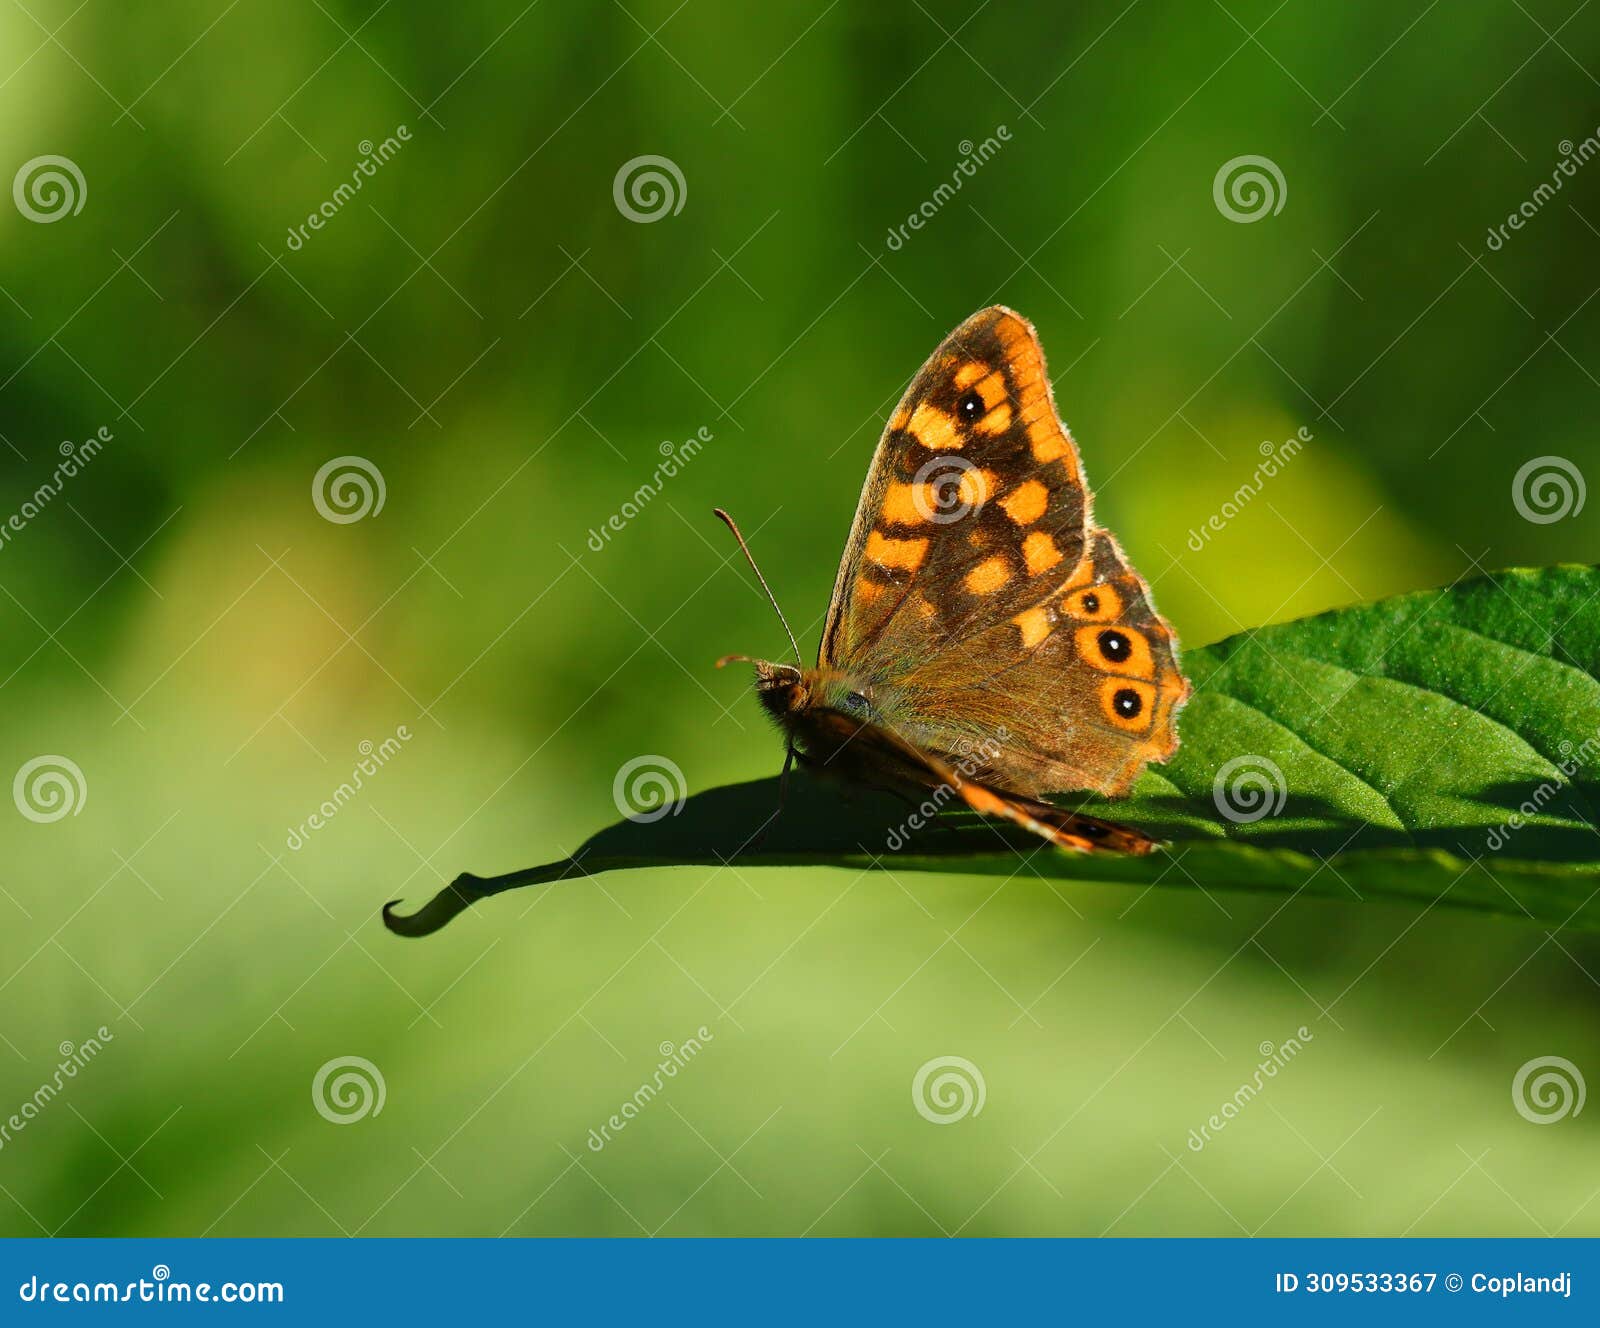 wall brown butterfly, lasiommata megera.